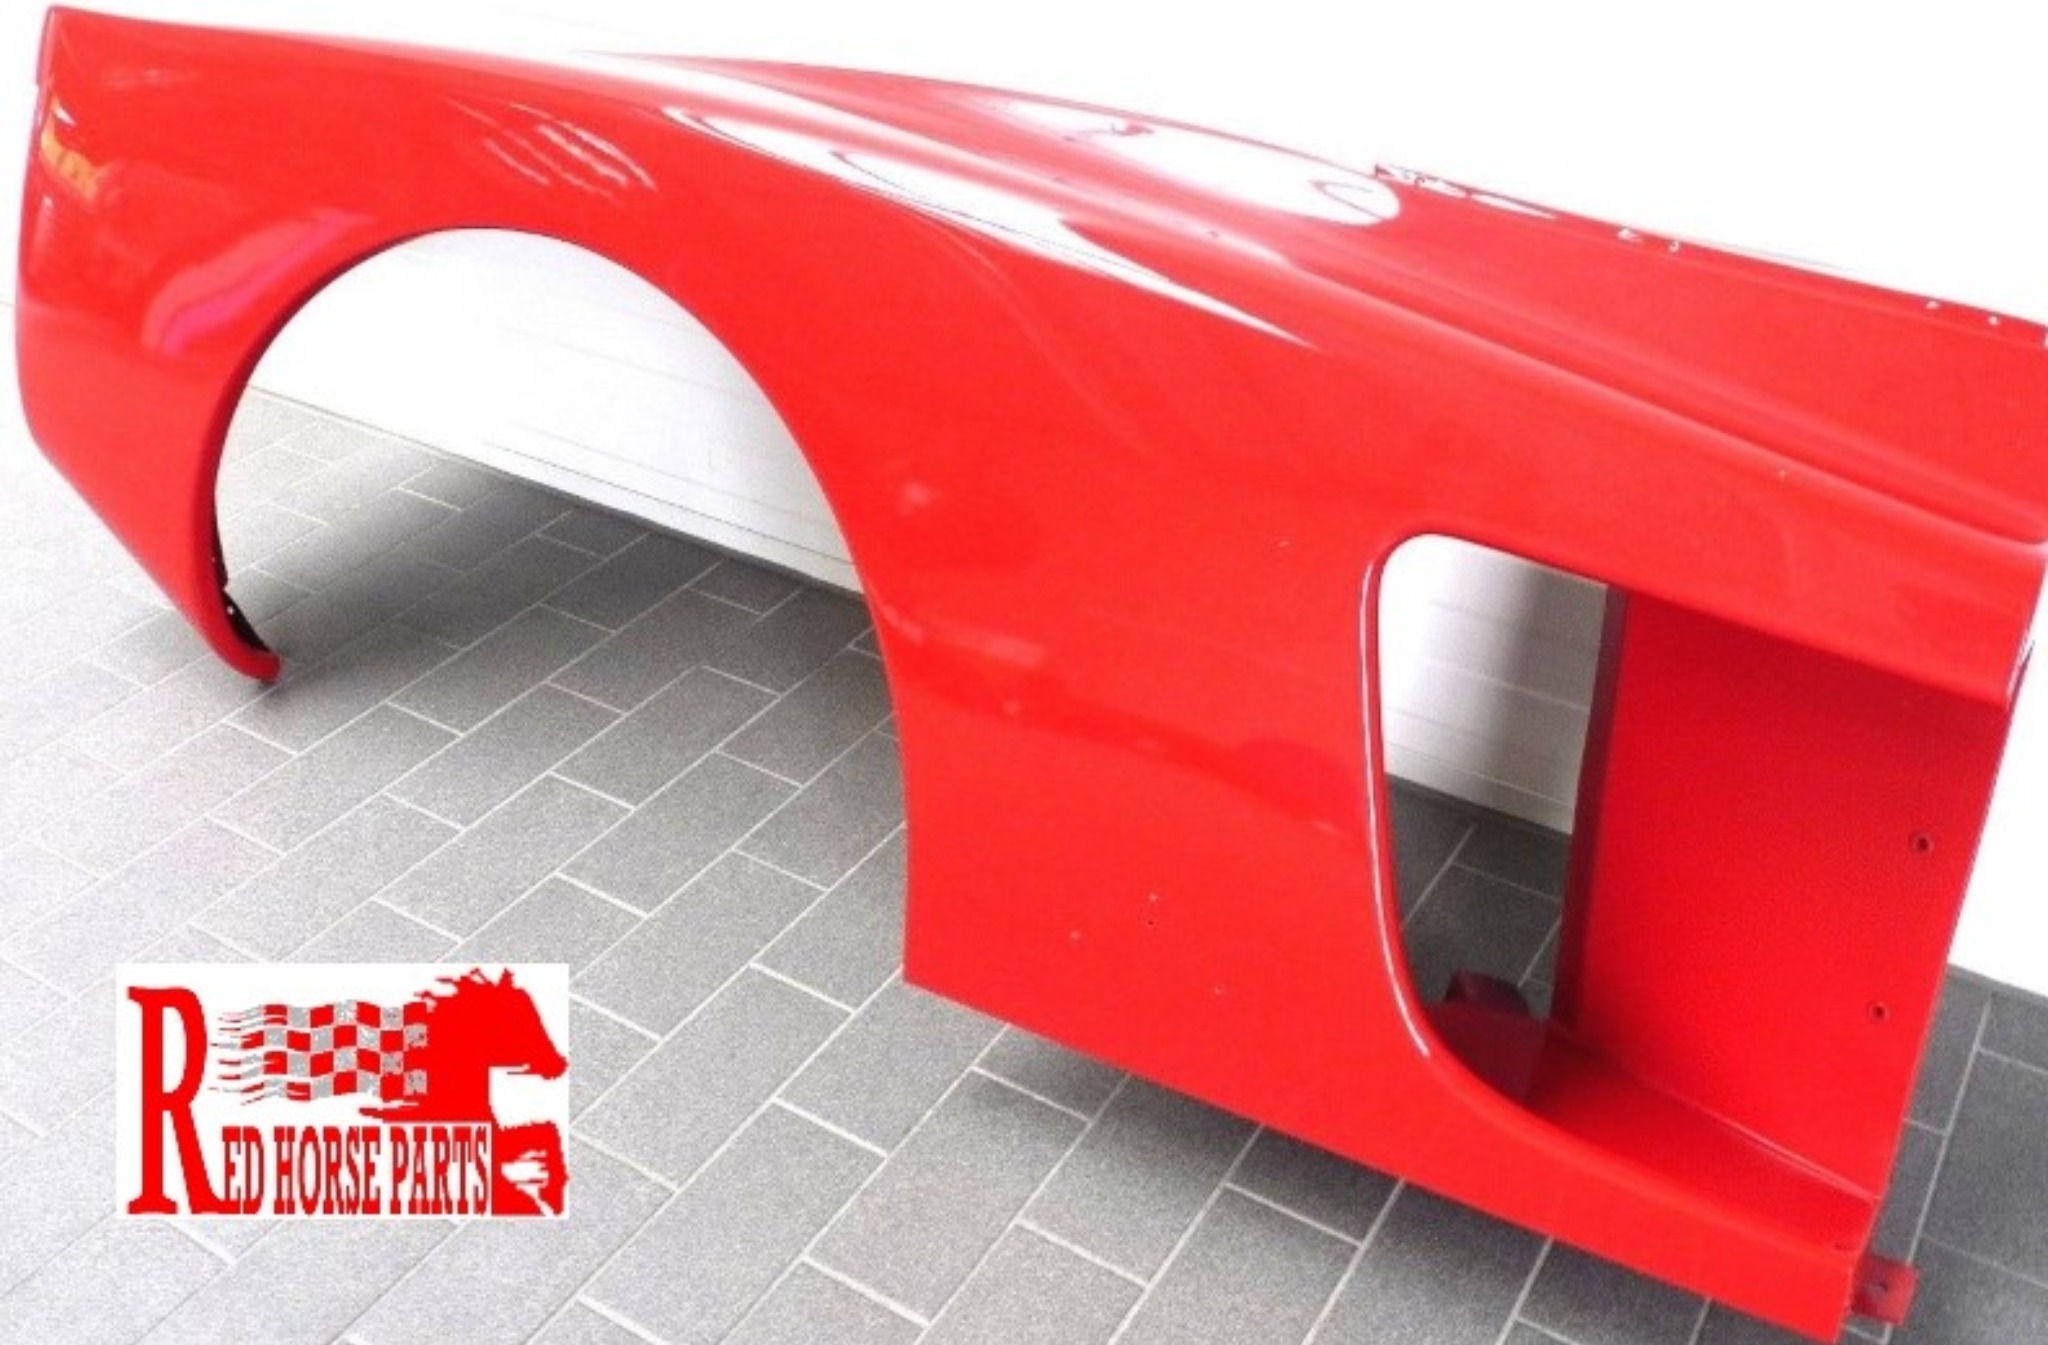 Ferrari Testarossa rear panel